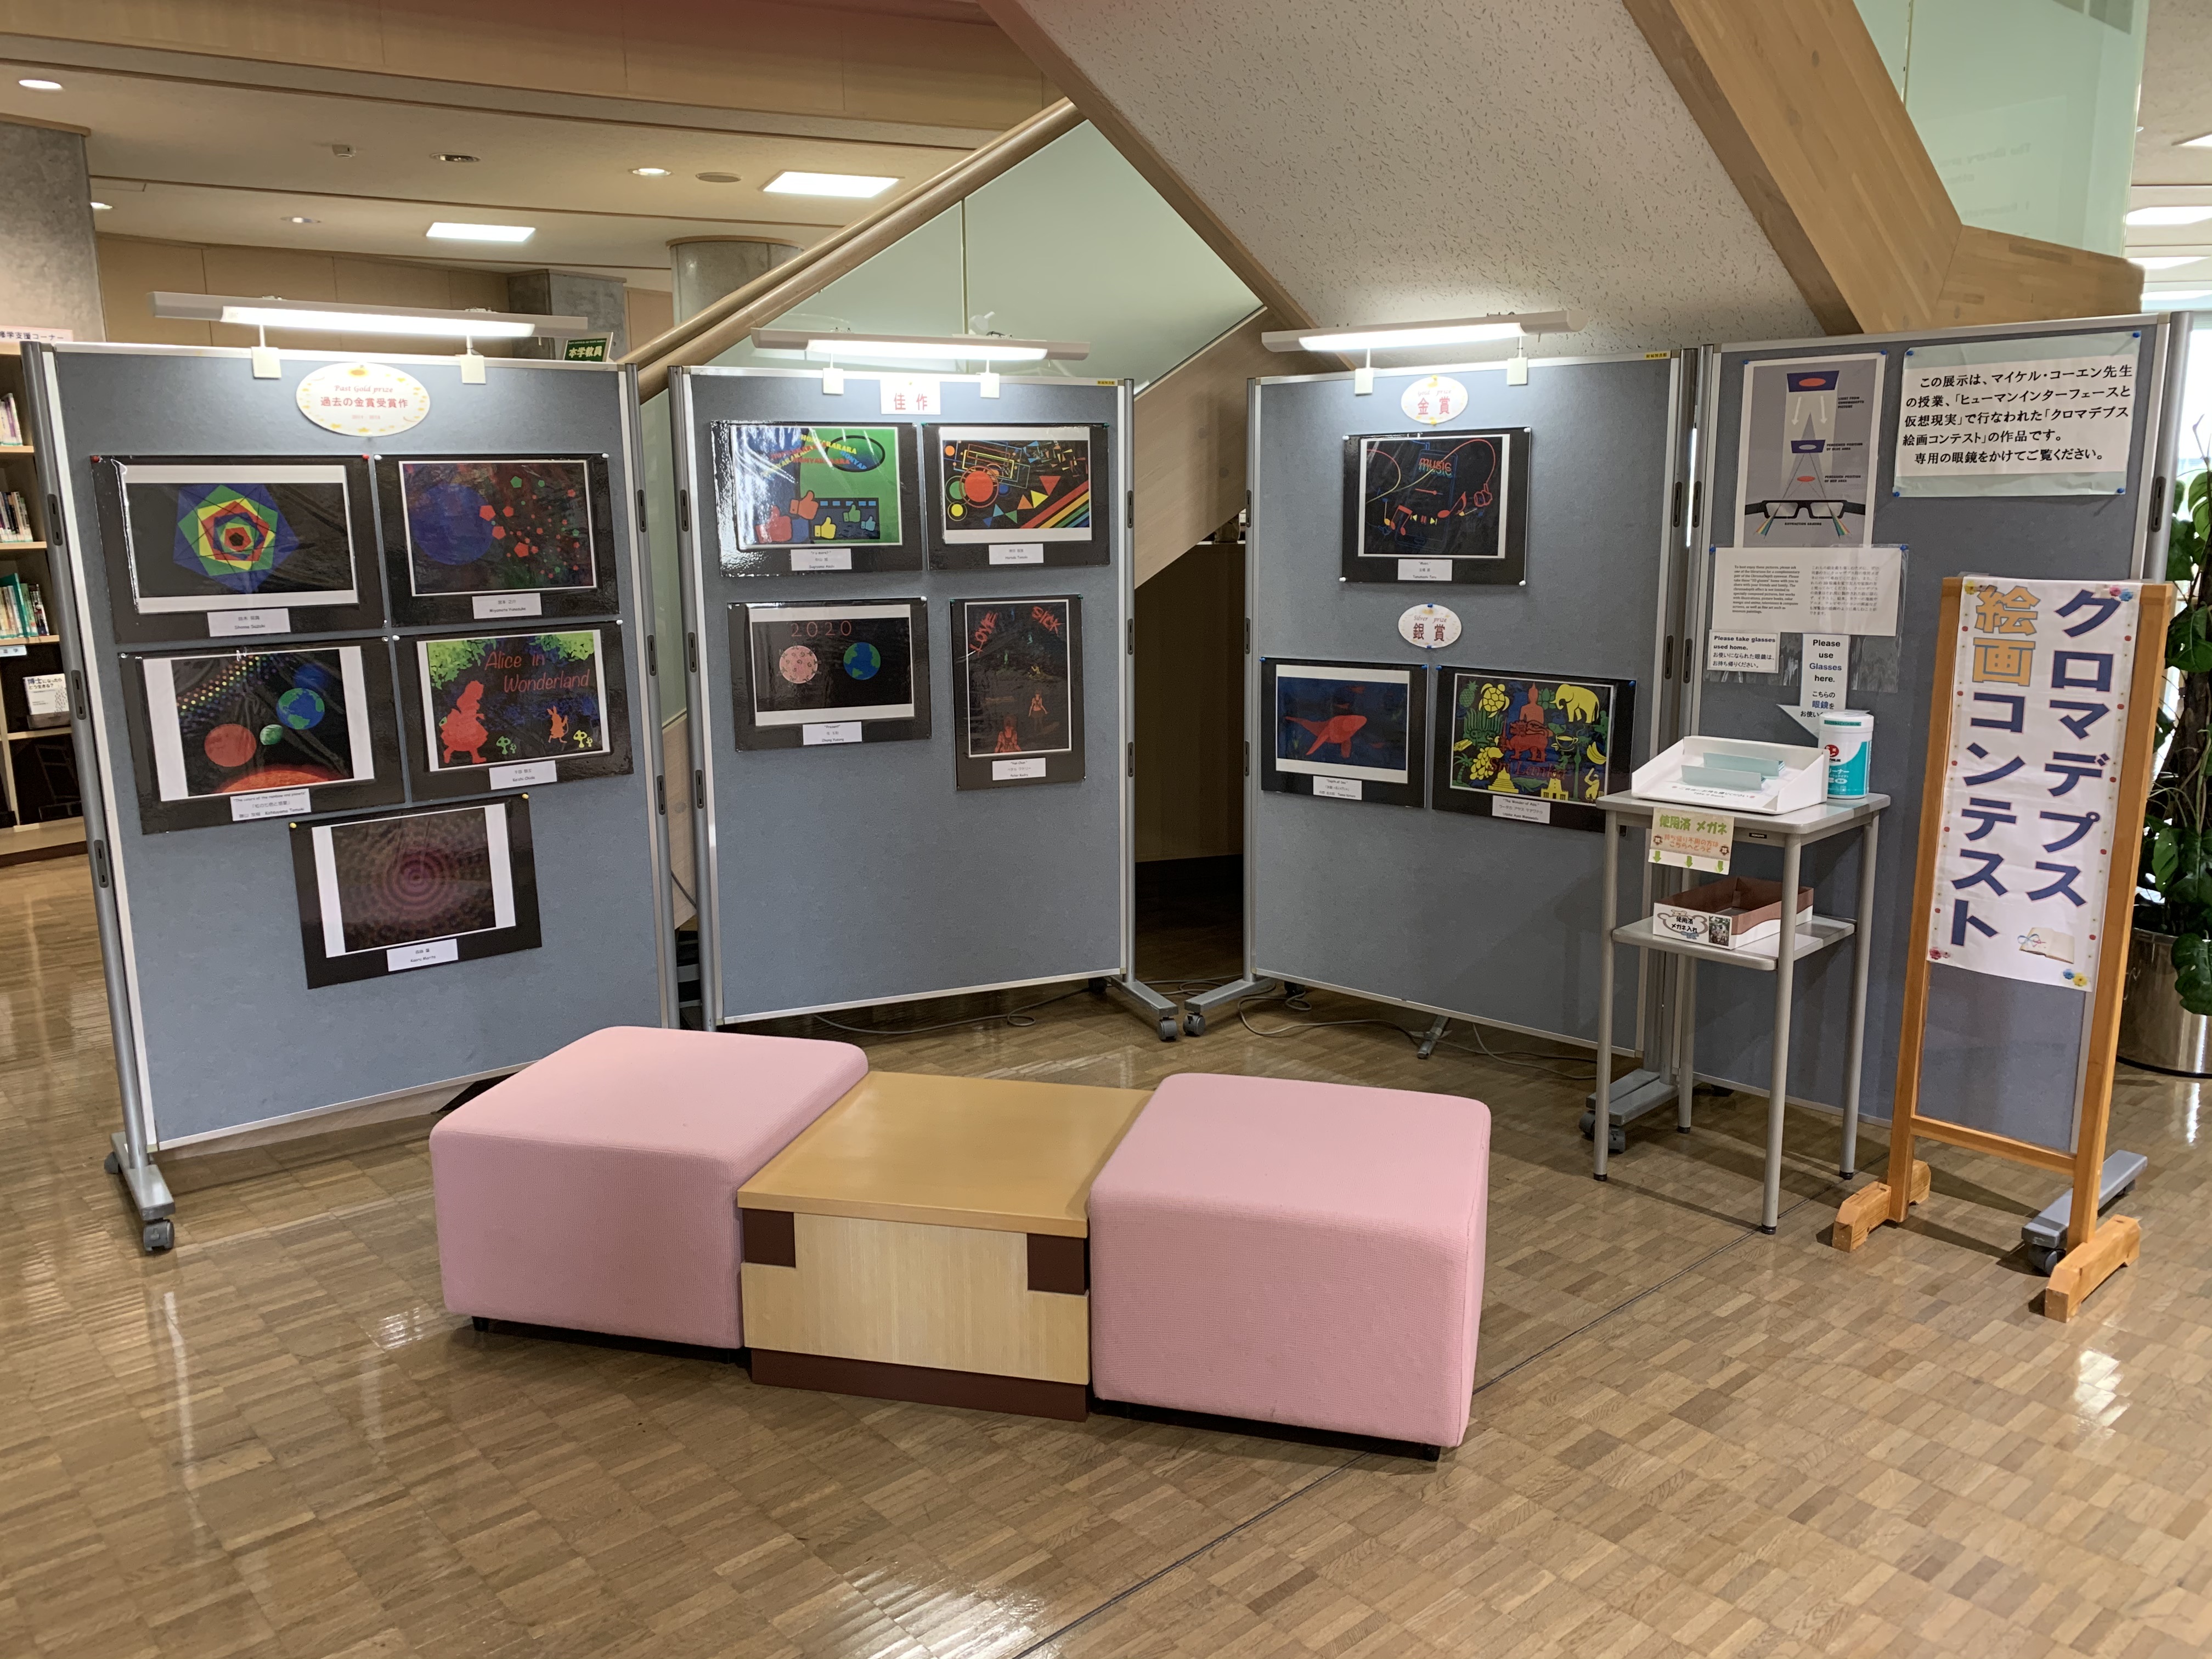 University of Aizu Chromadepth Picture Contest Exhibition